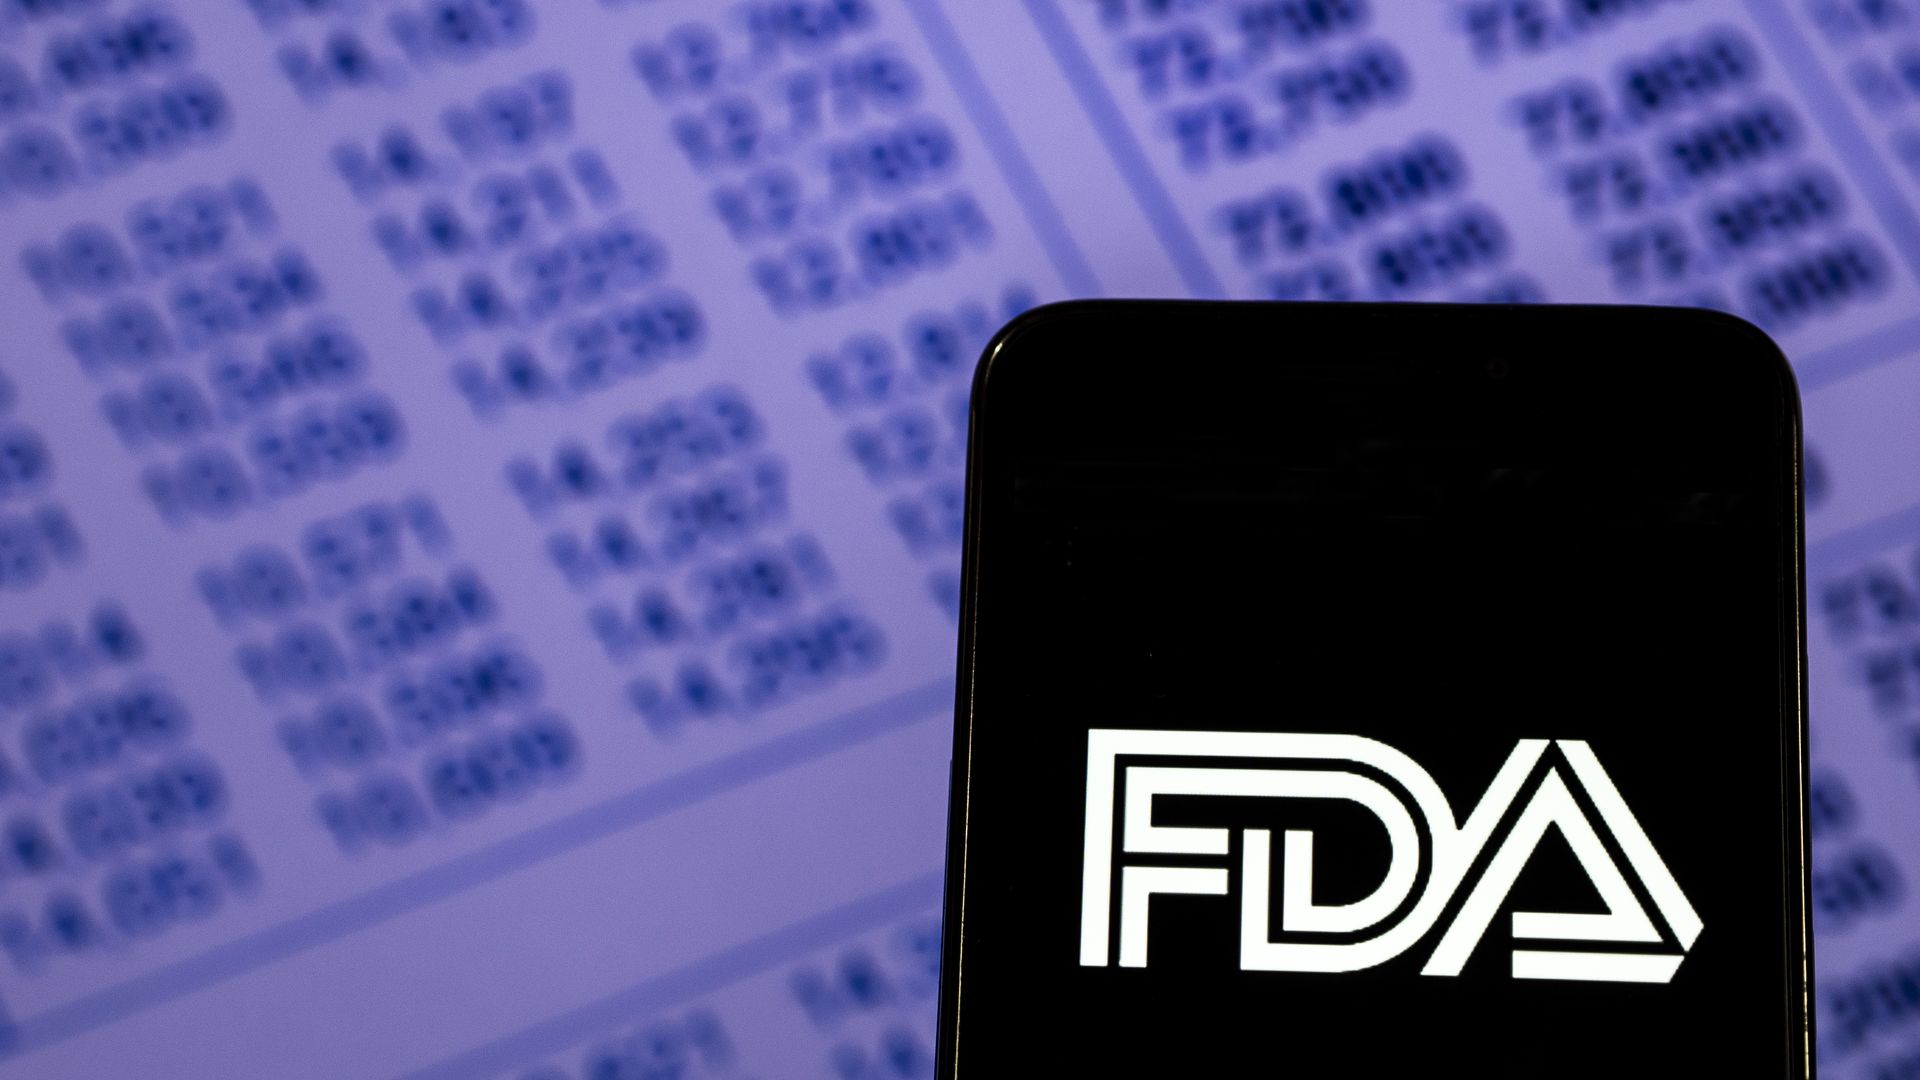 FDA agency logo on a phone screen